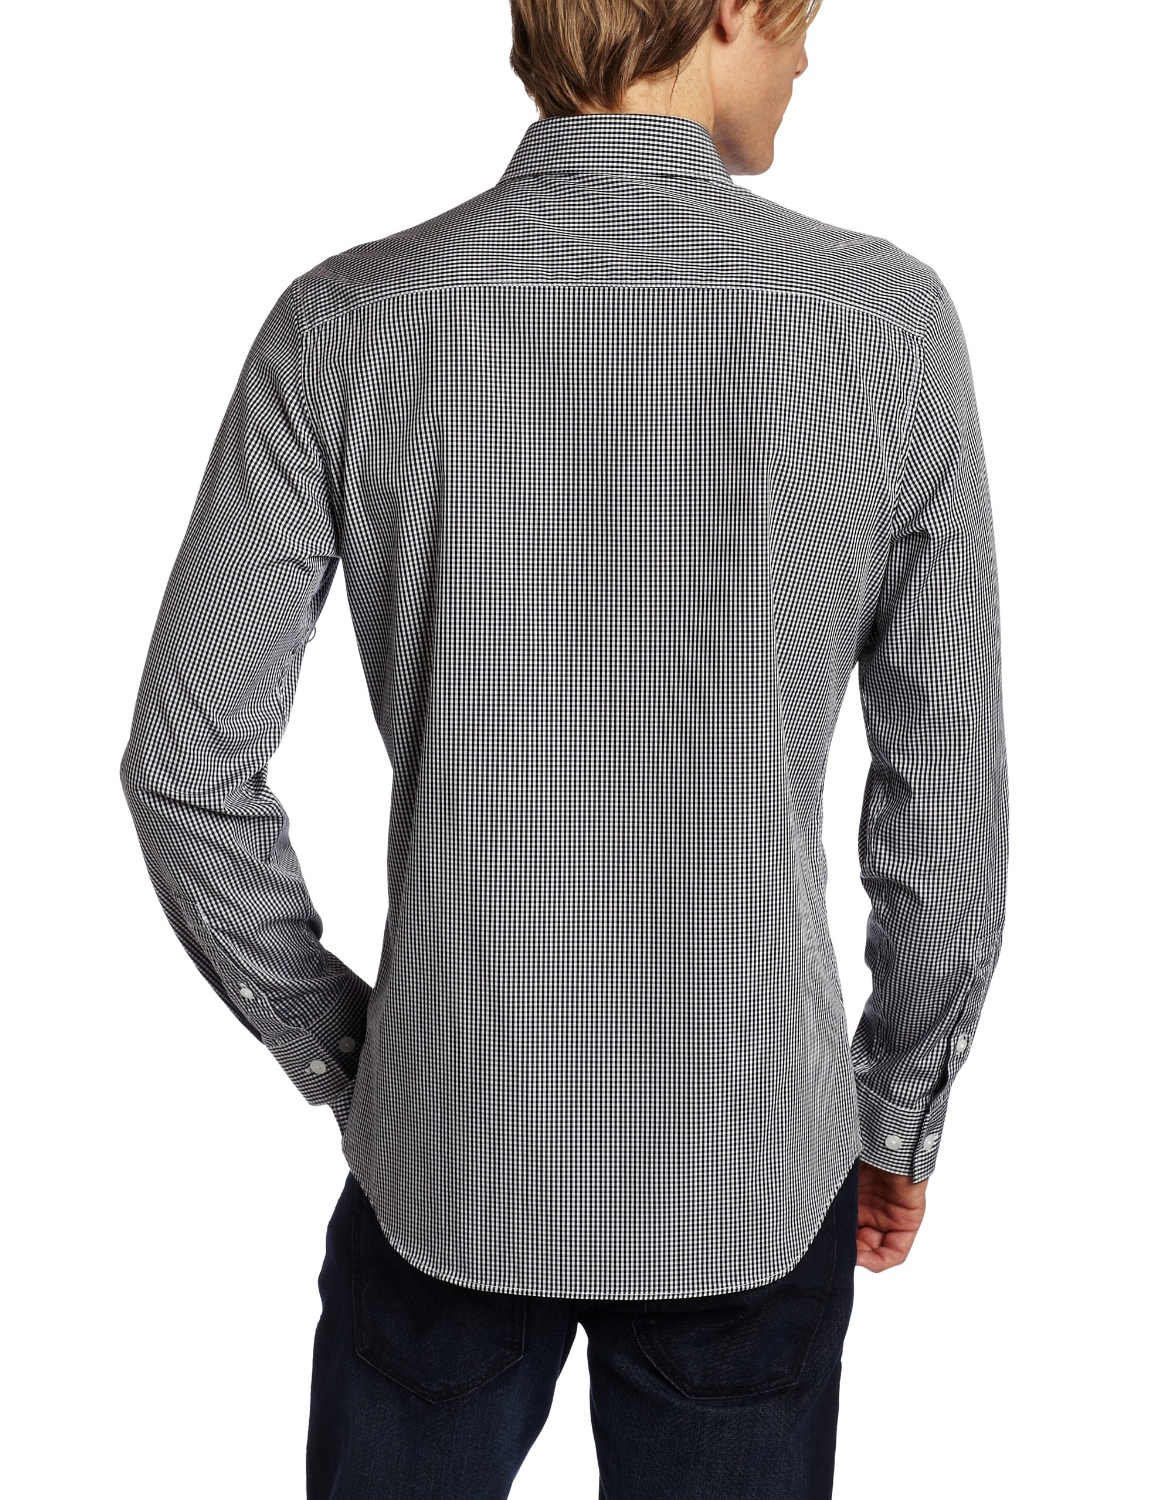 Apparel for Men: Calvin Klein Slim-Fit Long-Sleeve Shirt